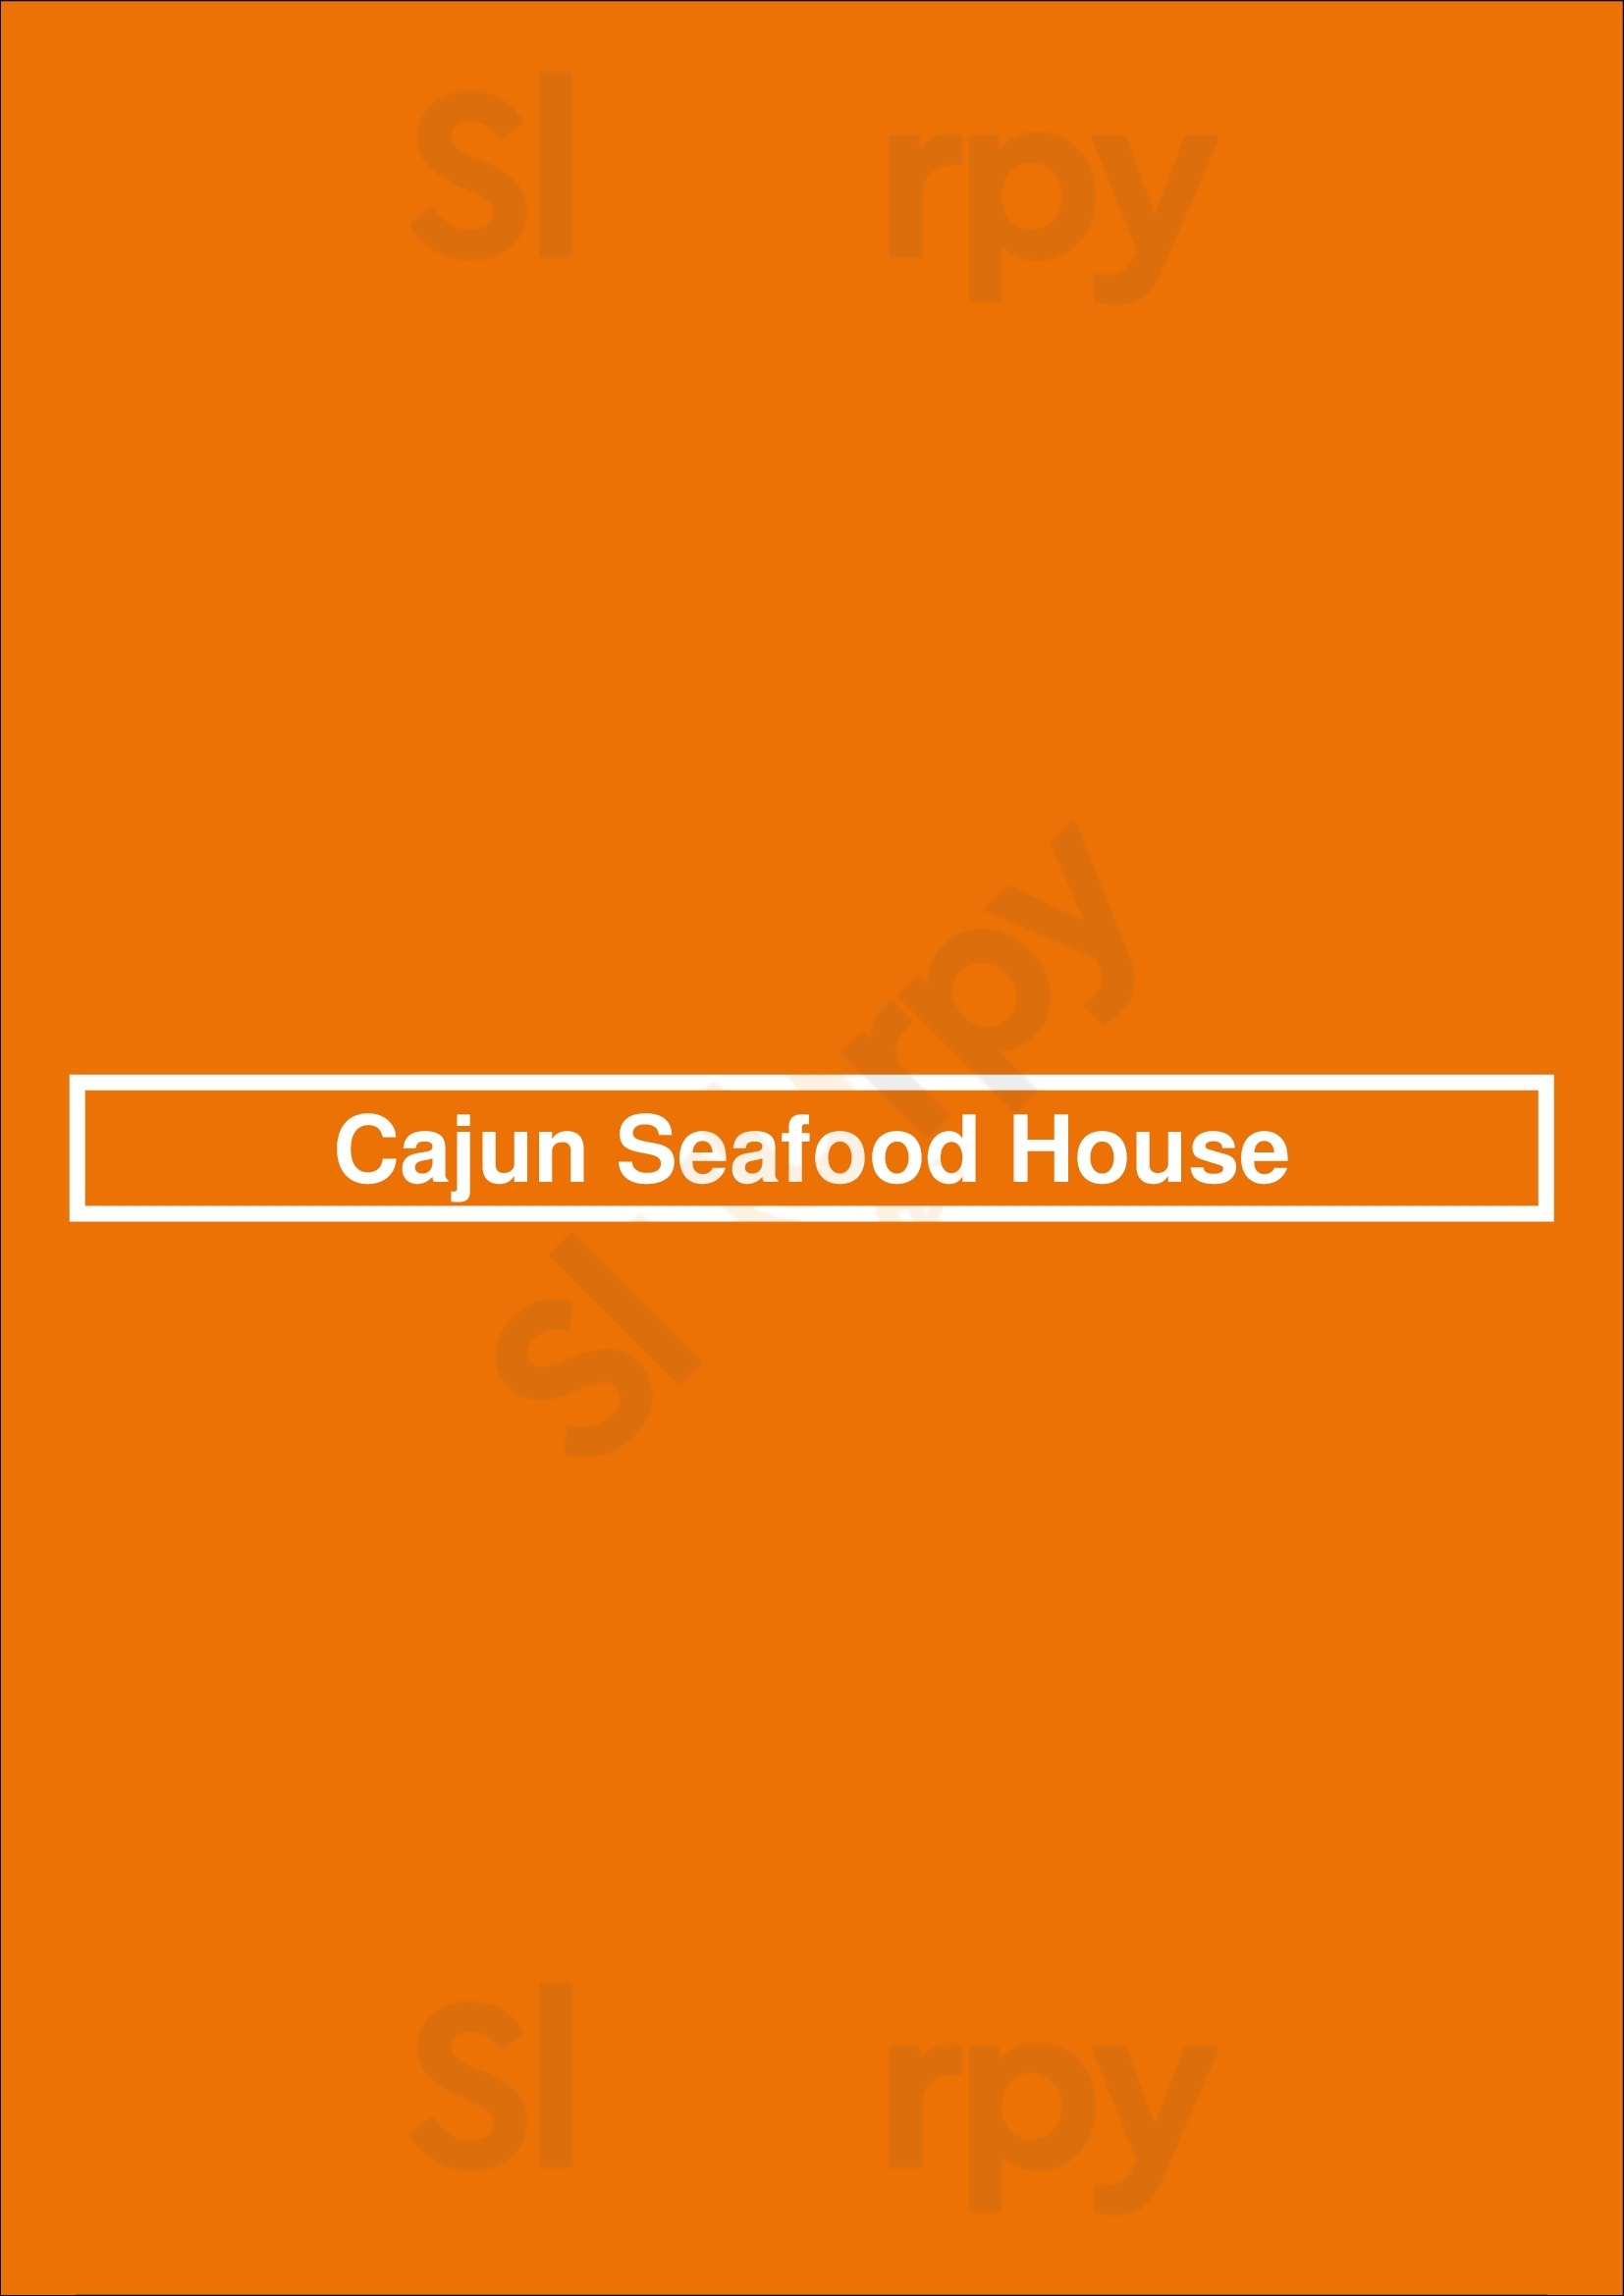 Cajun Seafood House Los Angeles Menu - 1